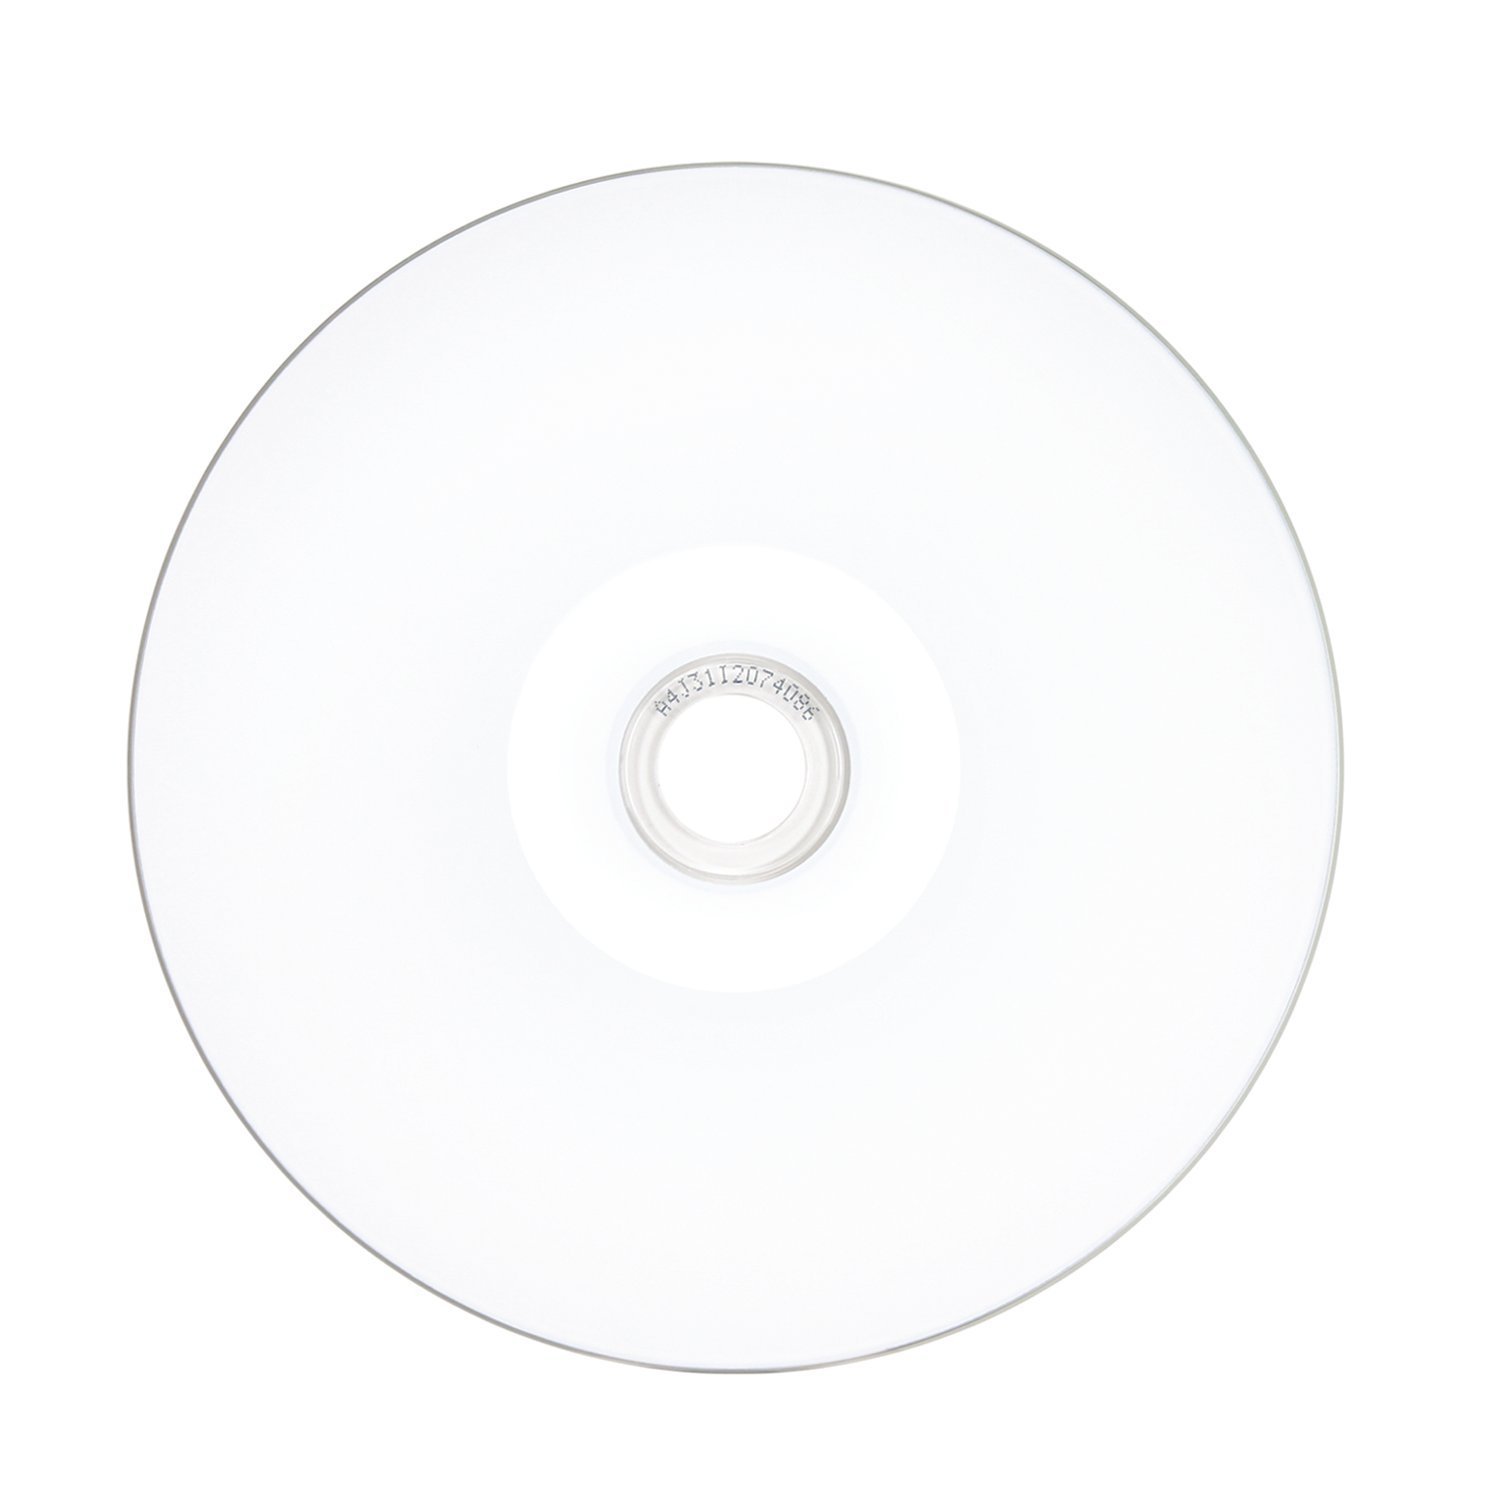 Amazon.com: Verbatim CD-R 700MB 52X DataLifePlus White Inkjet ...